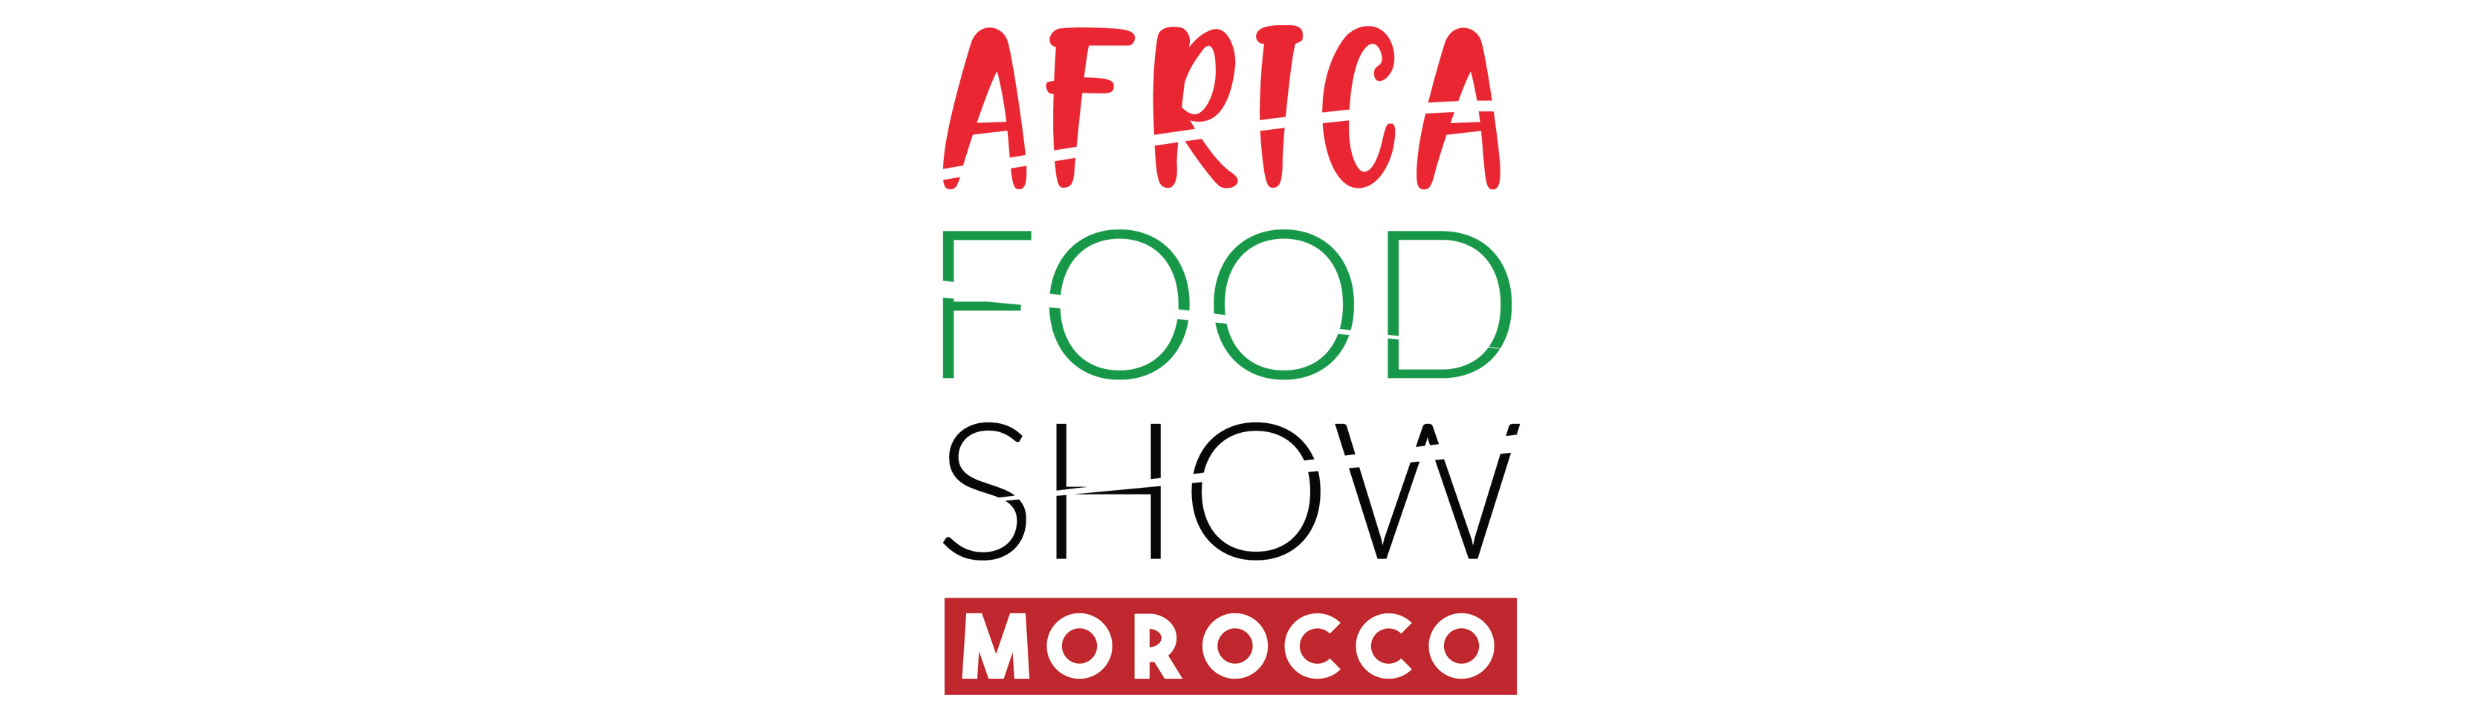 Africa Food Show Morocco, Casablanca, Casablanca-Settat, Morocco